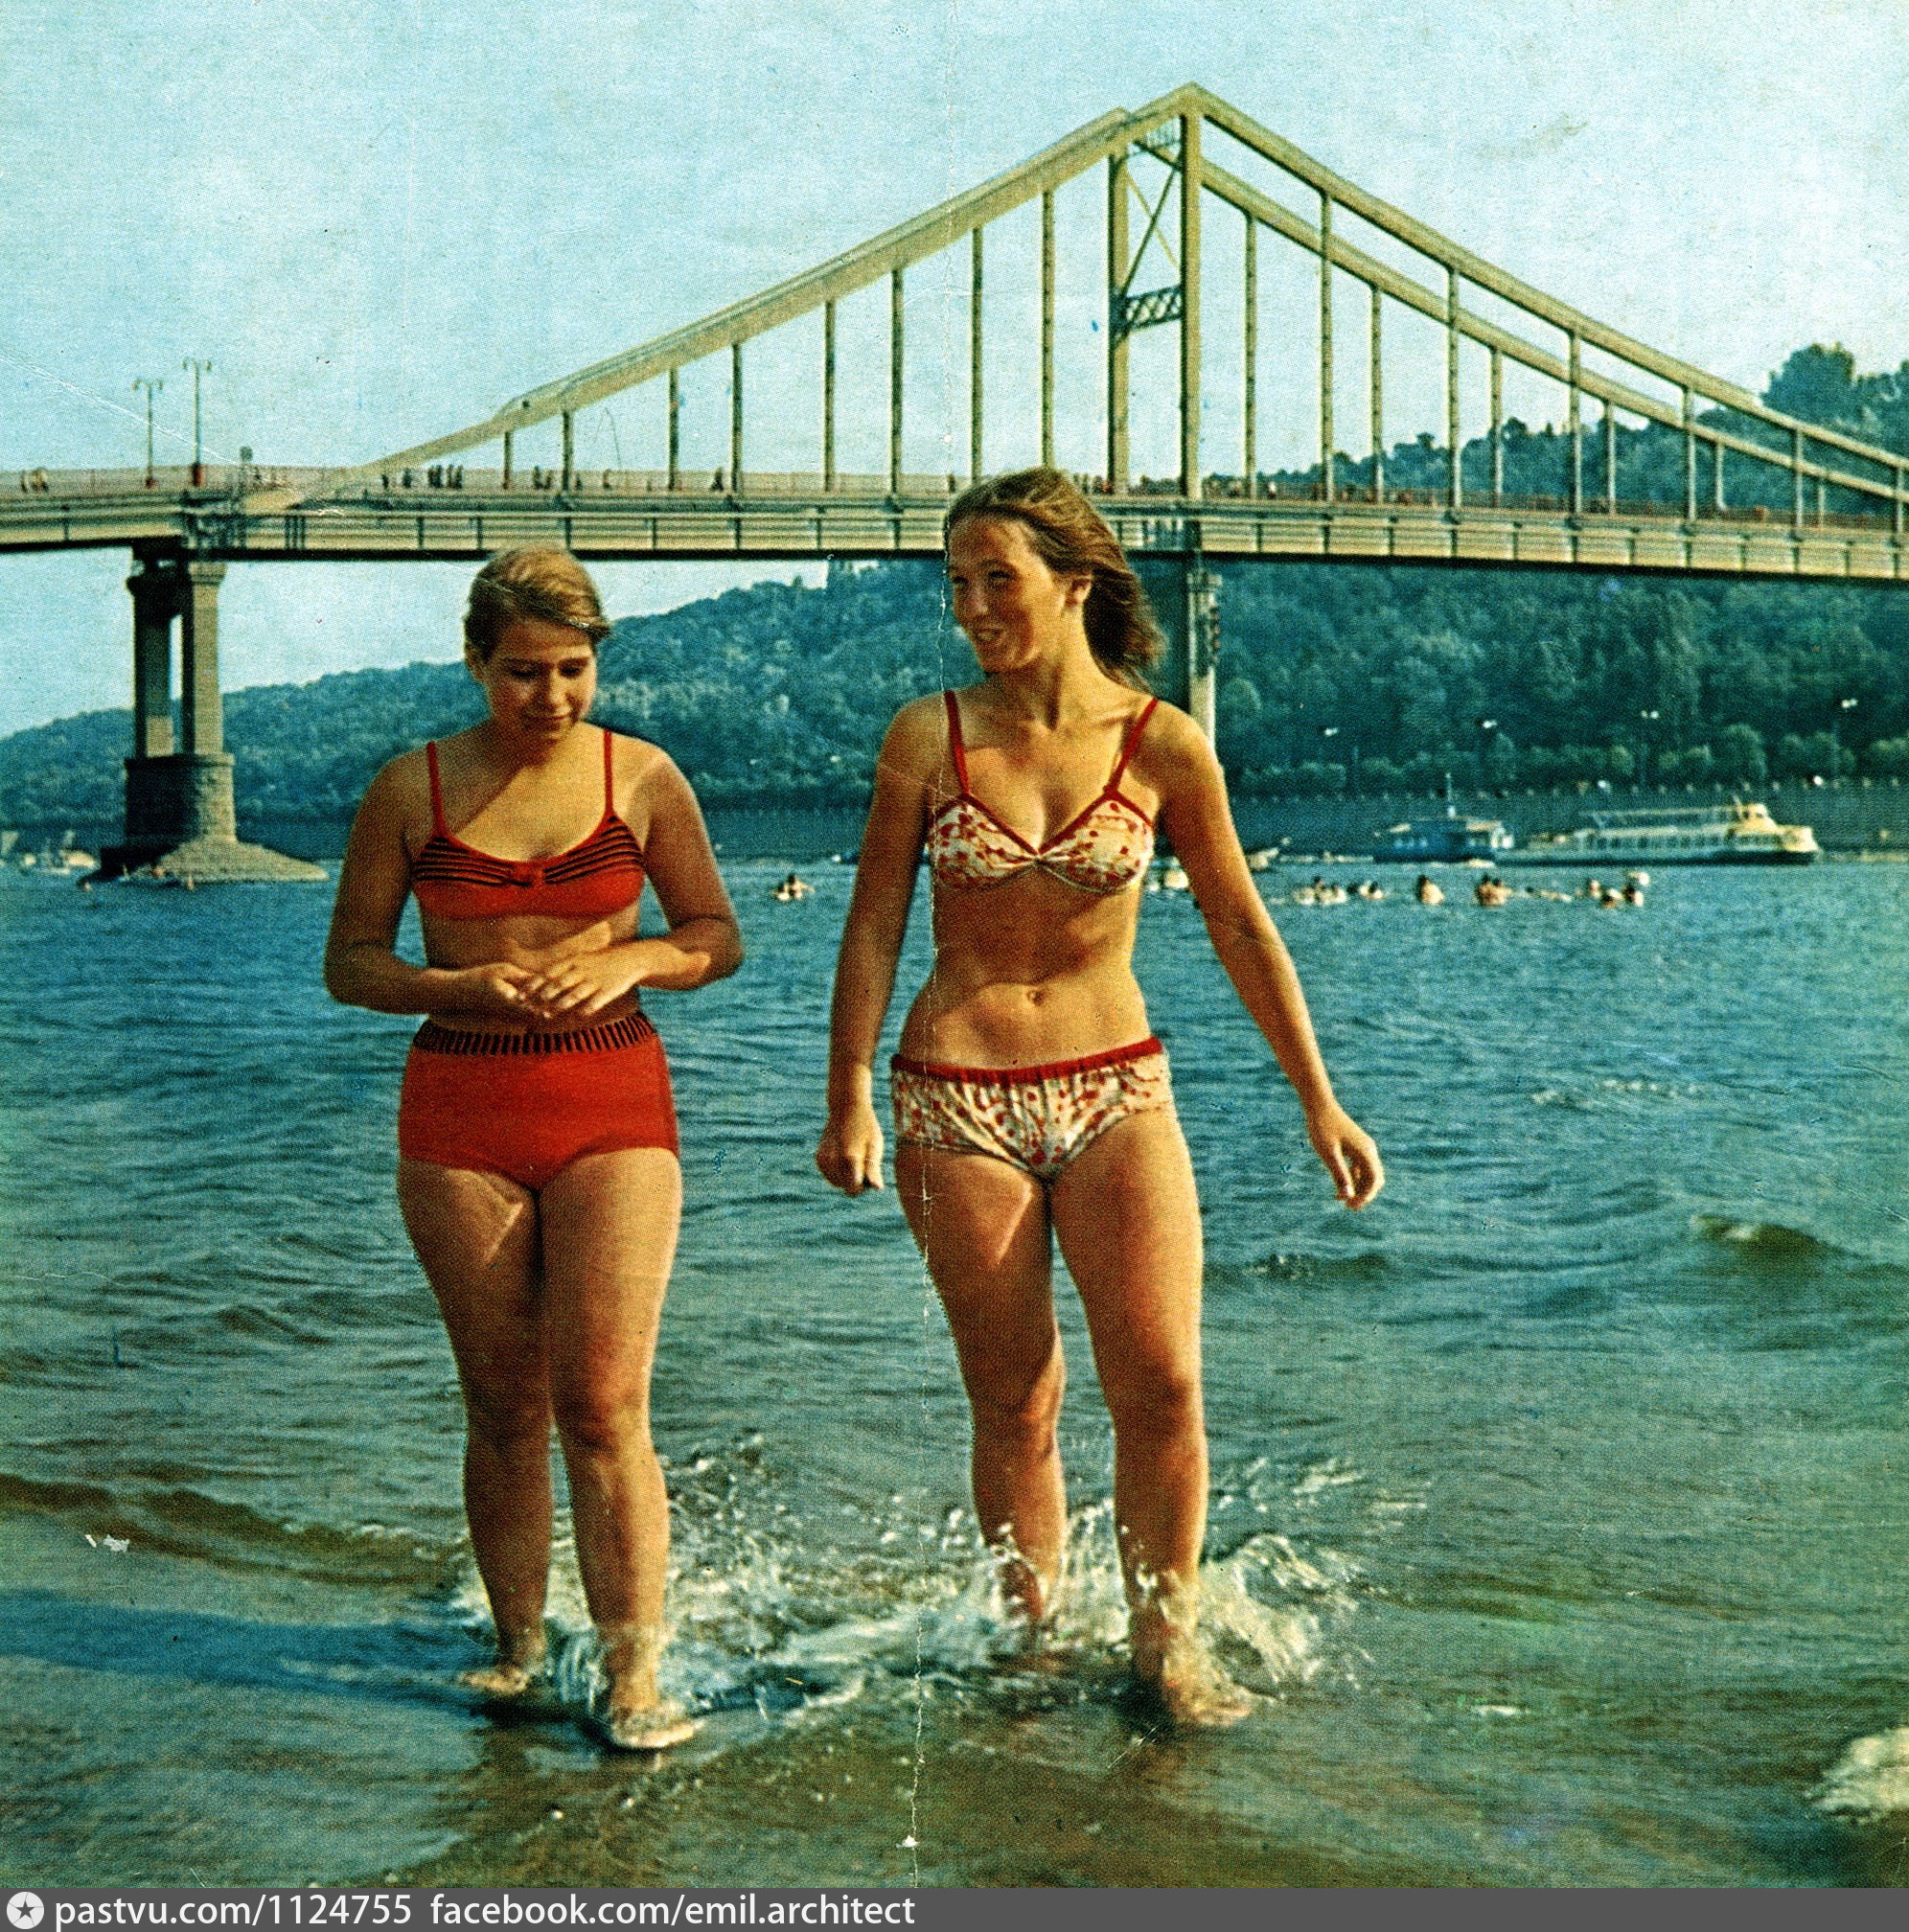 Фото советских женщин на пляже